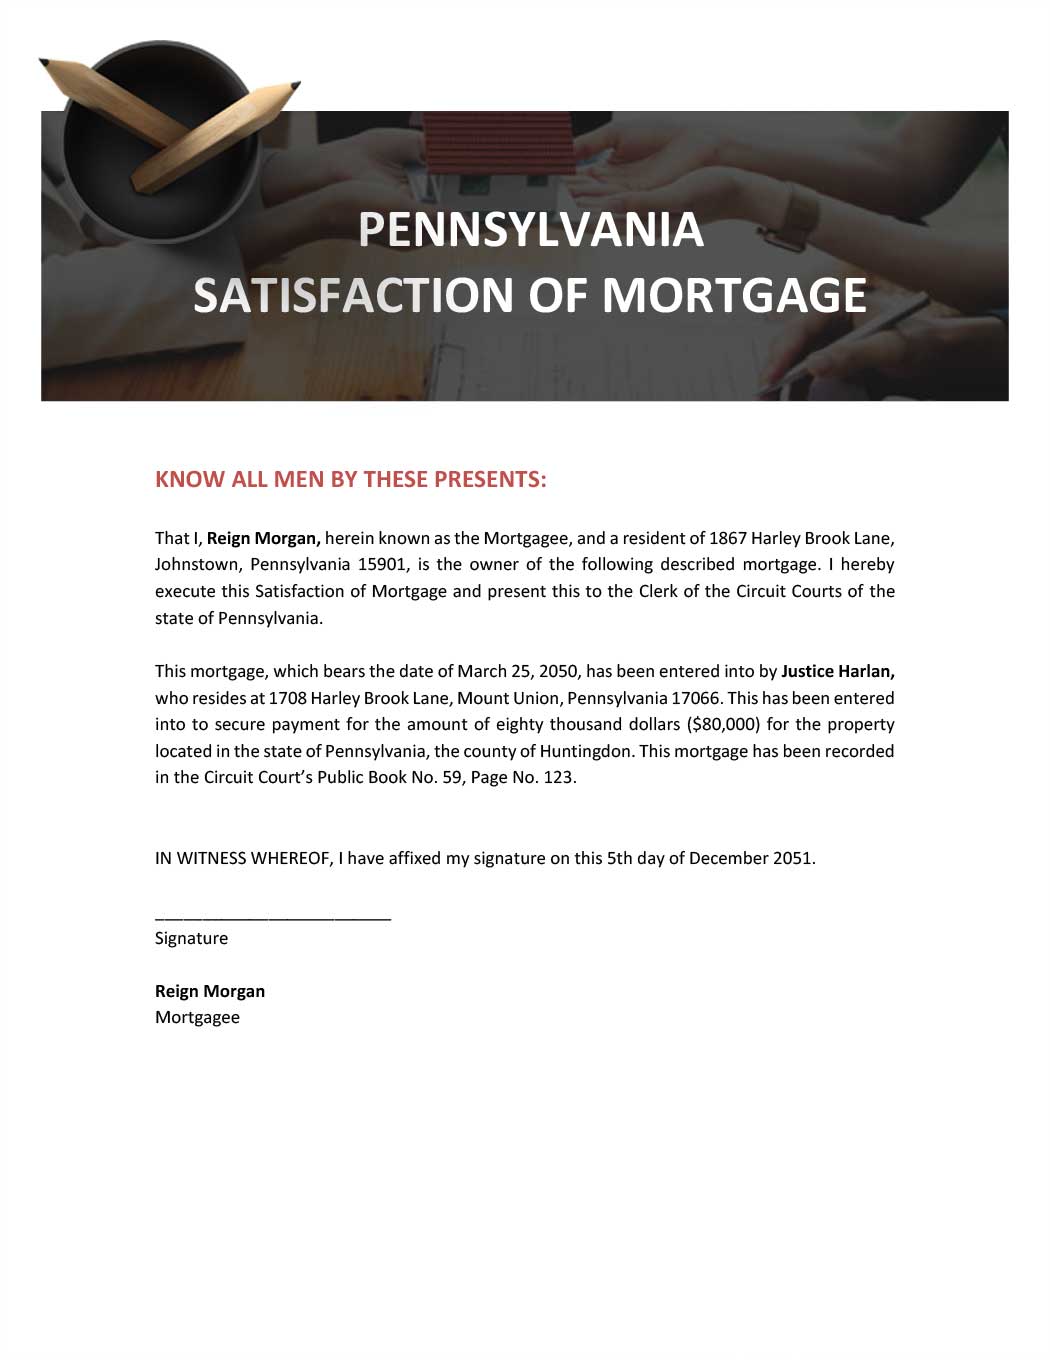 Pennsylvania Satisfaction of Mortgage Template